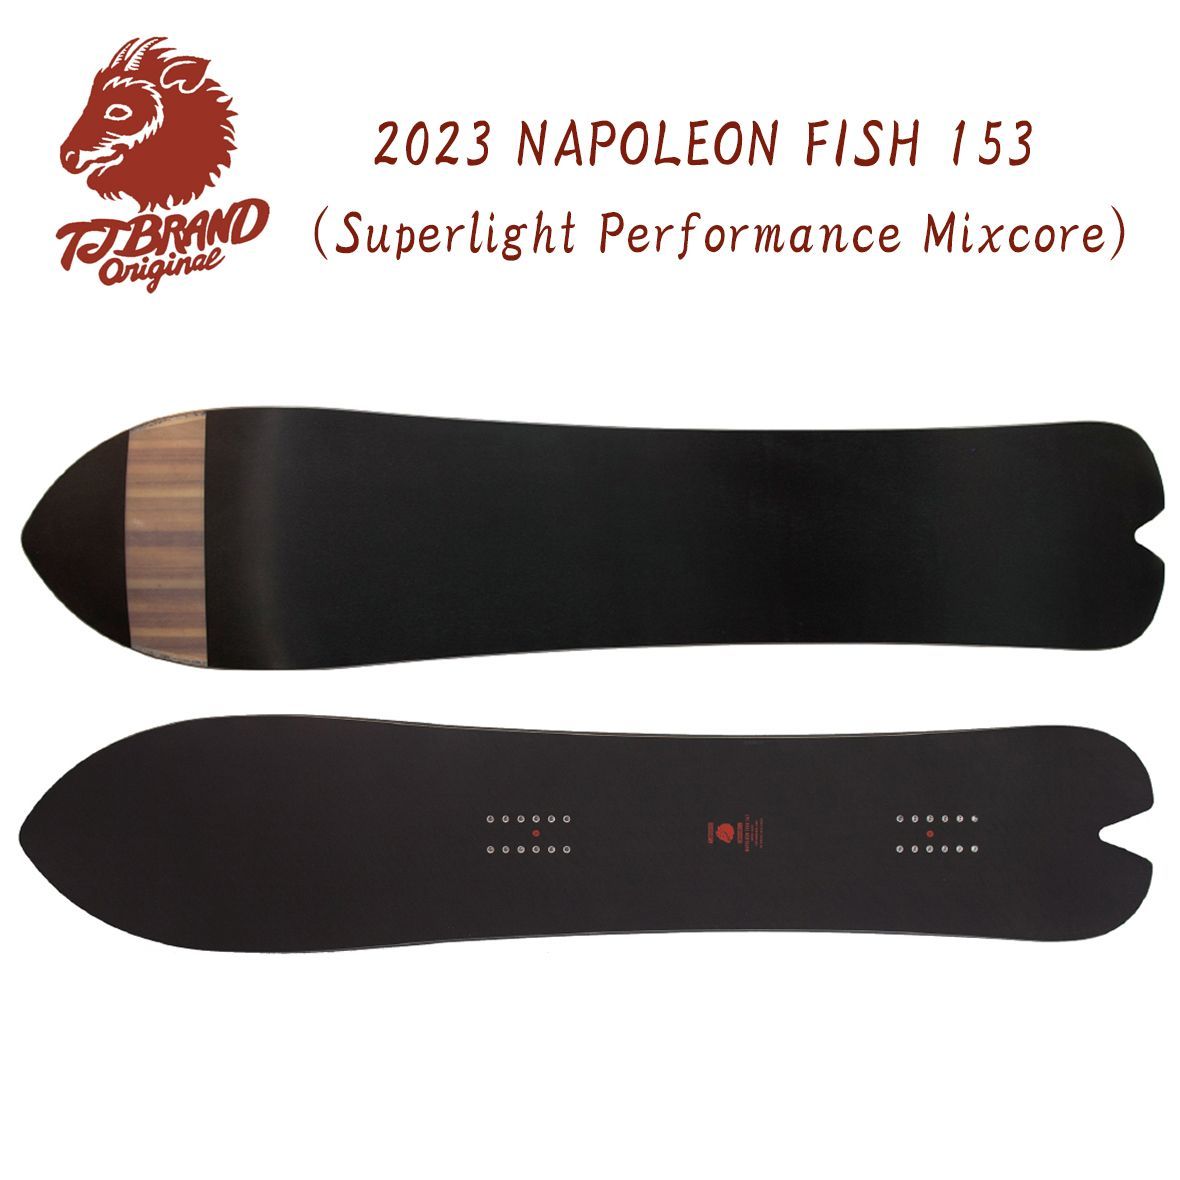 153cm TJ Brand Napoleon Fish-